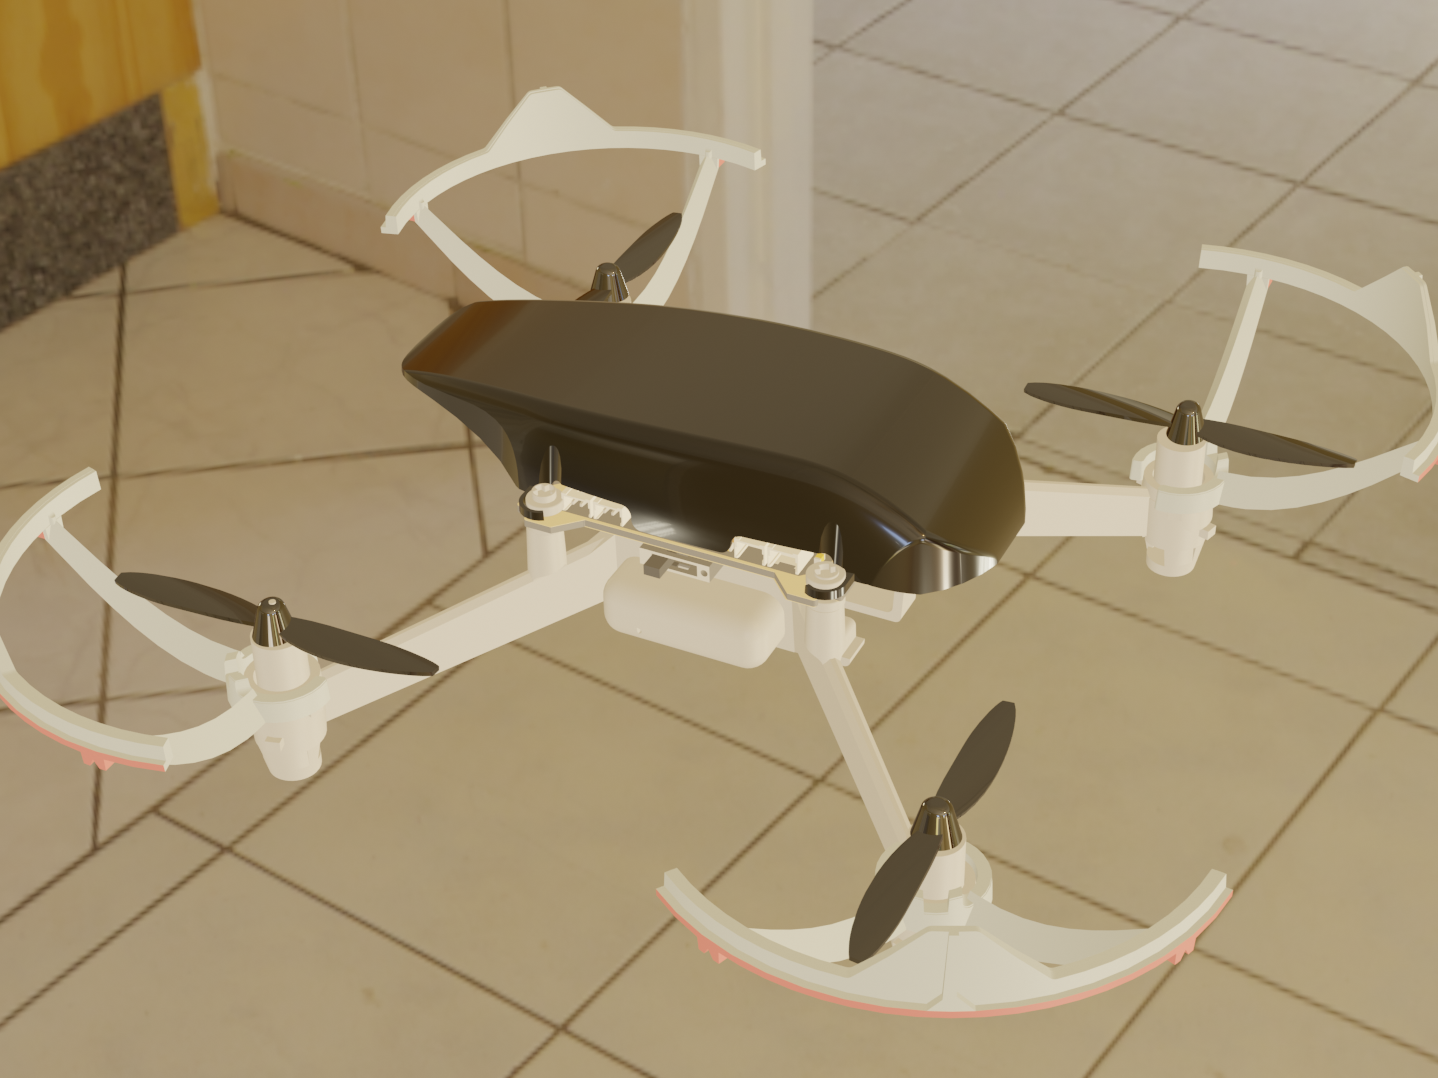 Drone Platform